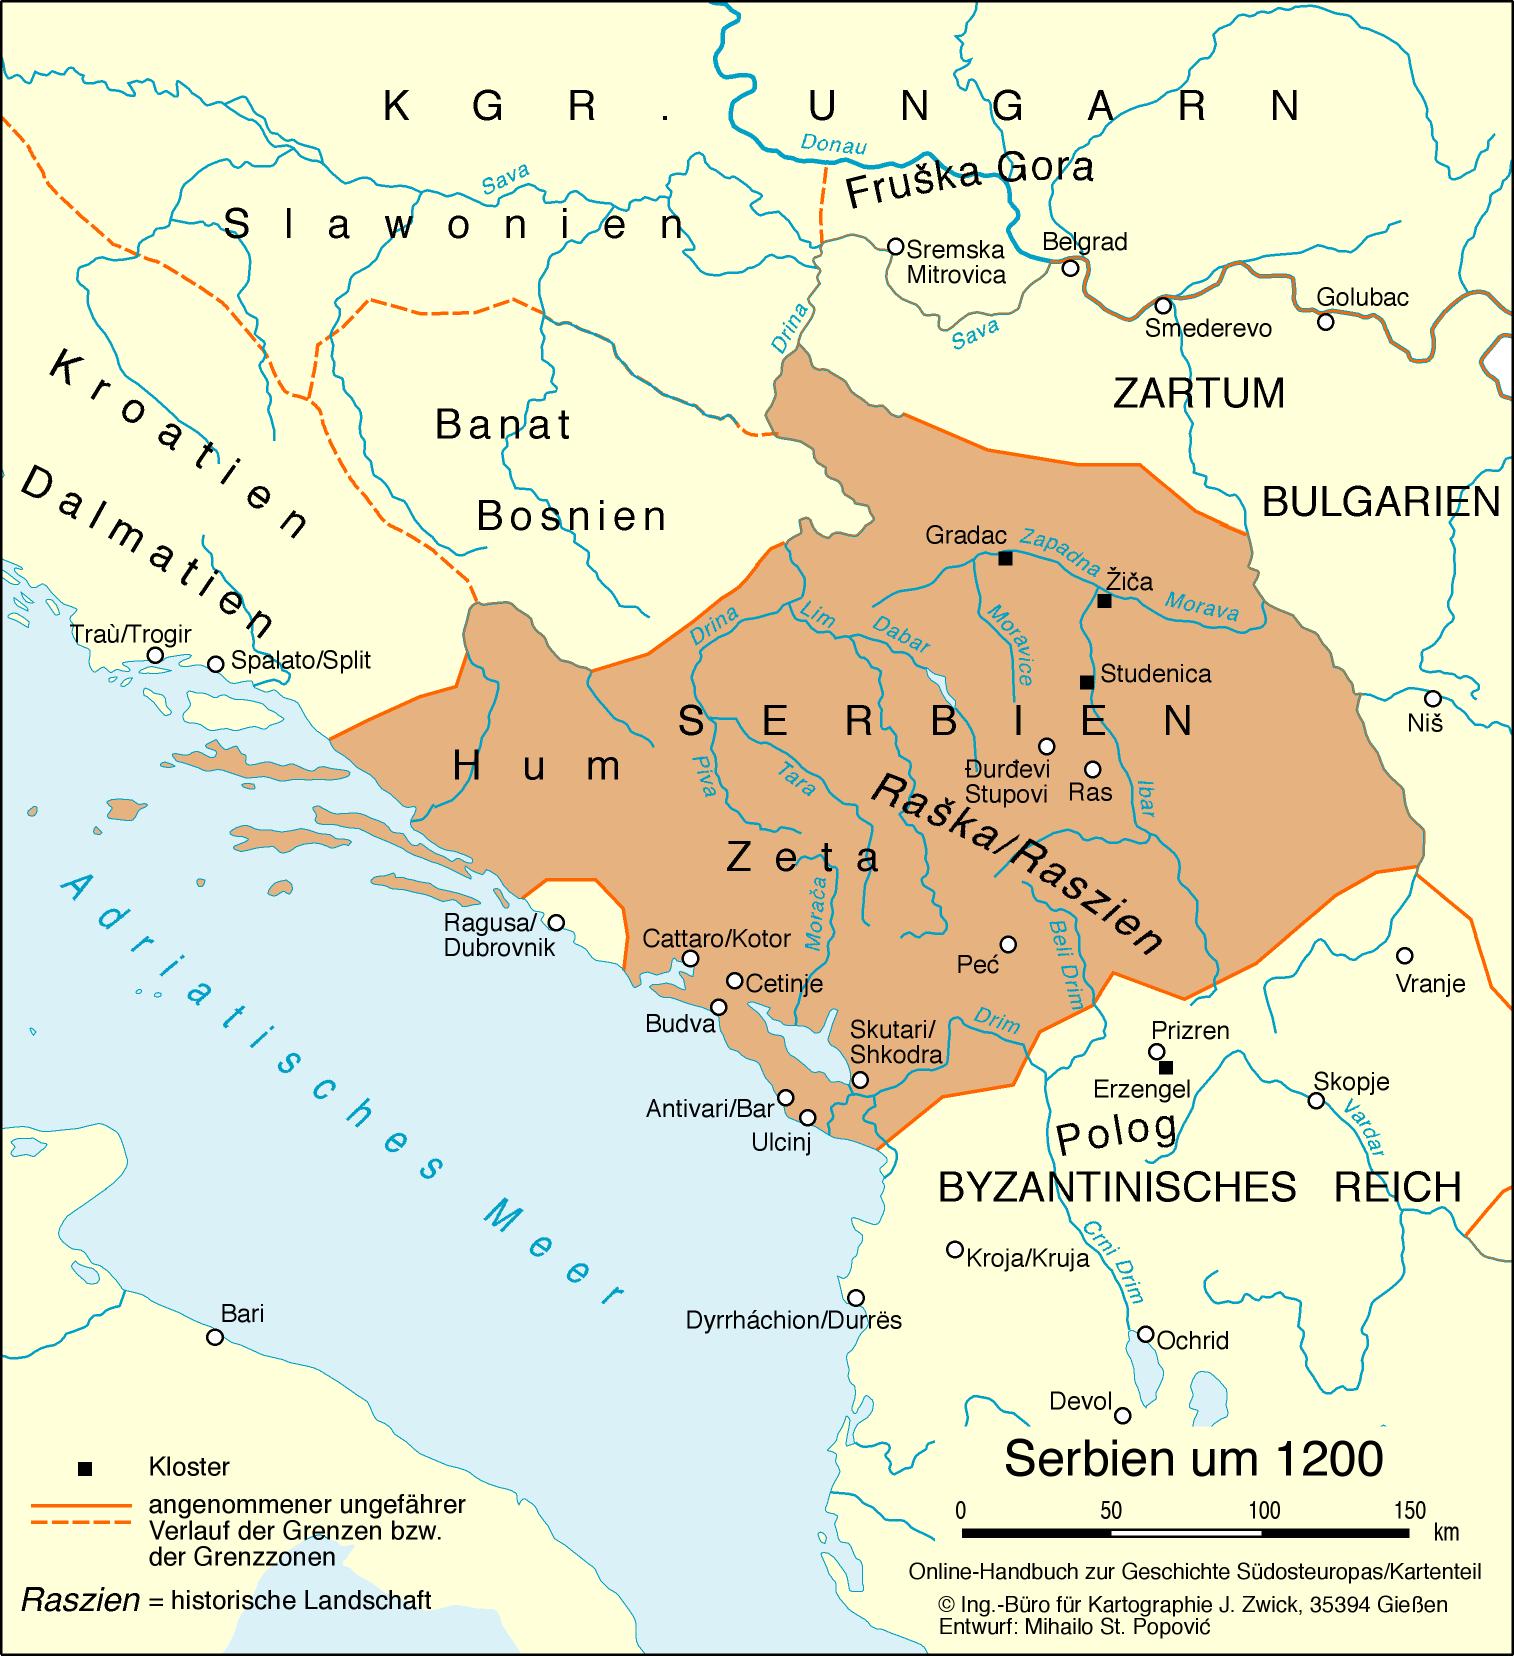 Serbien um 1200